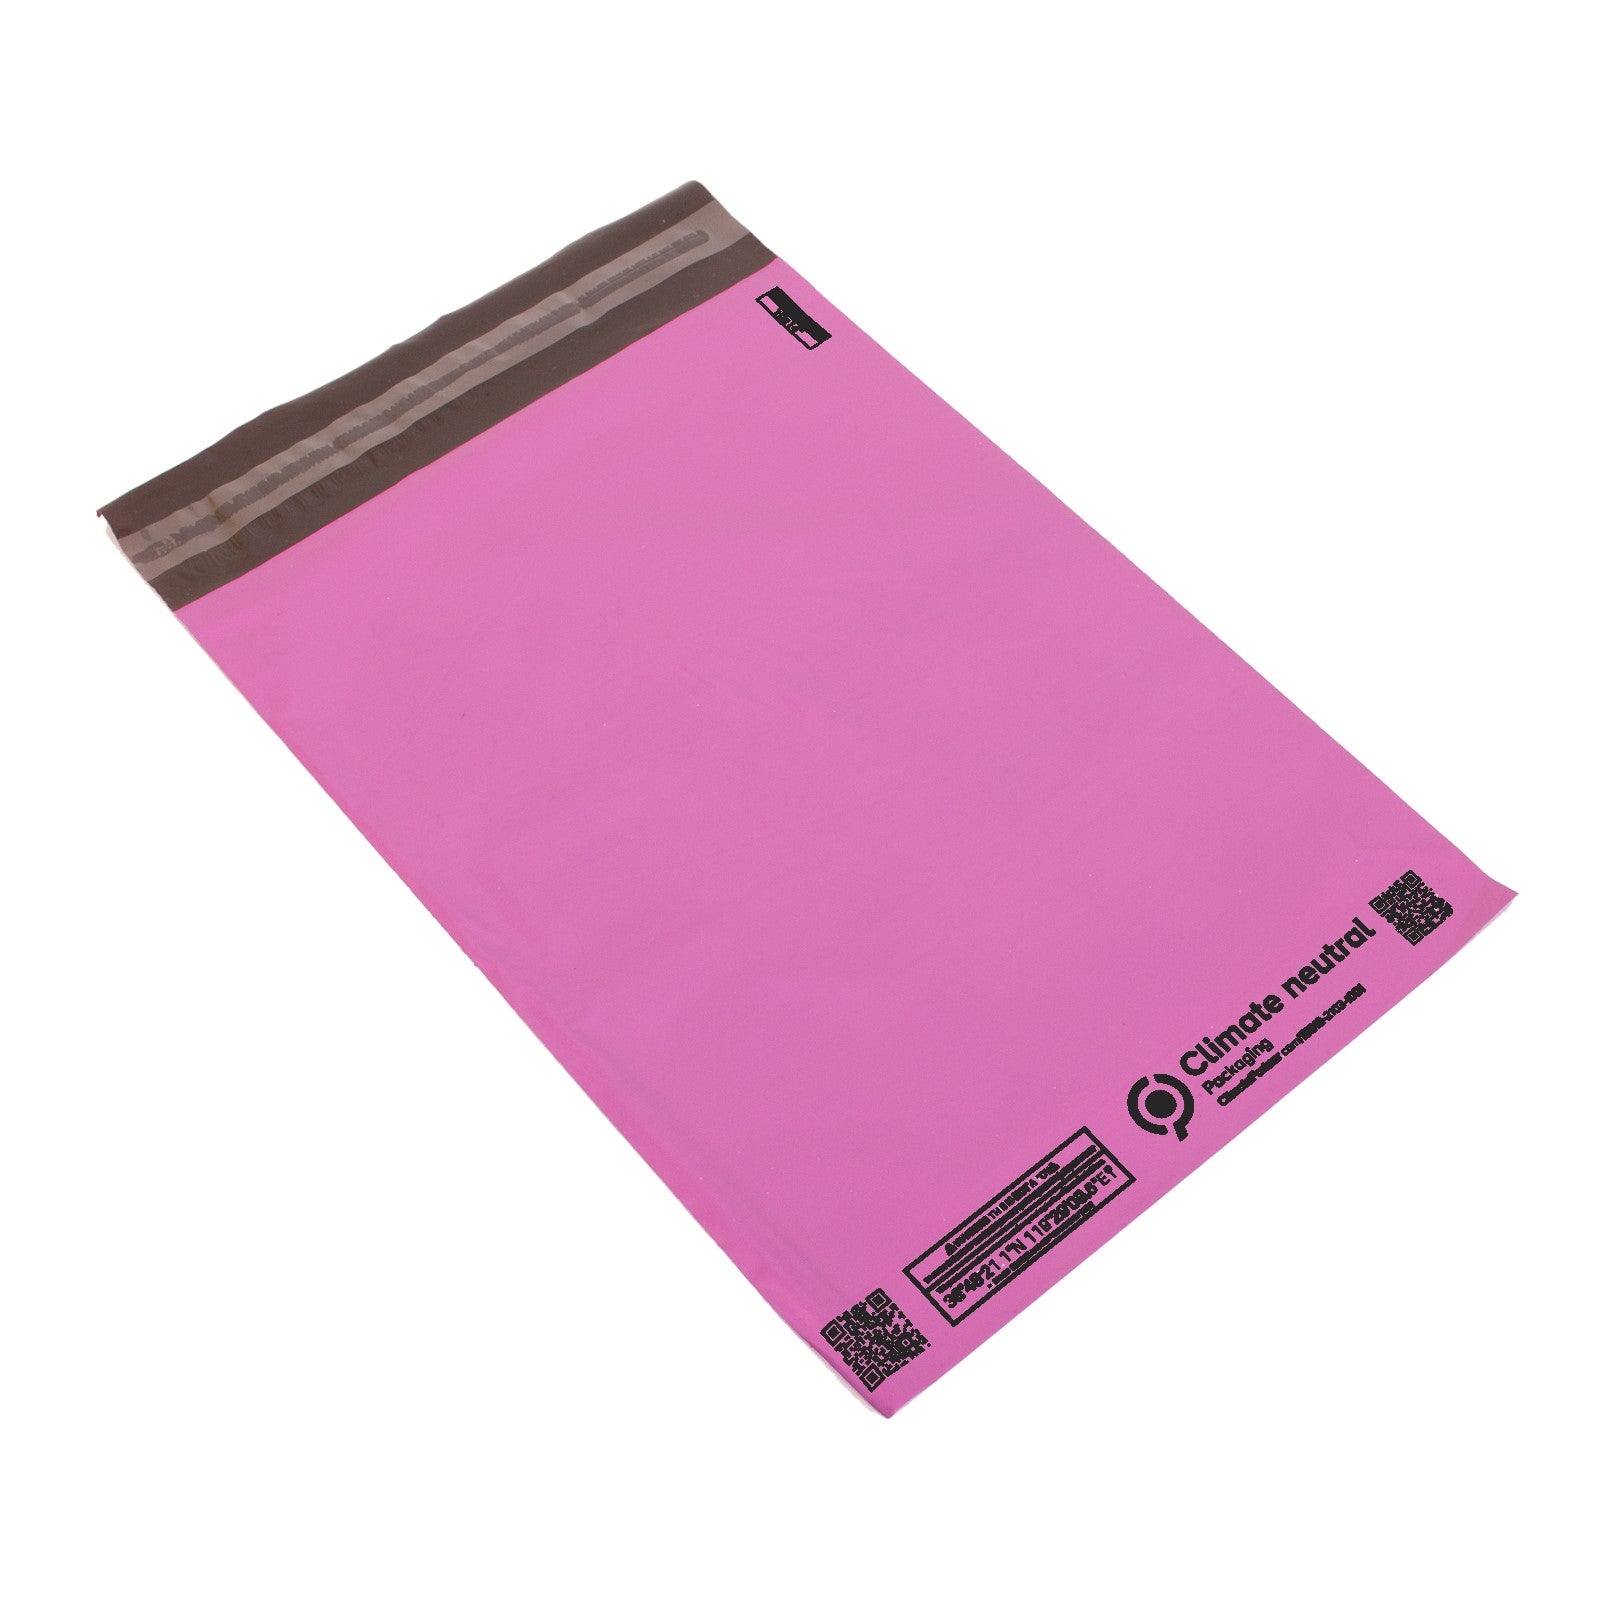 Full-back image of 10 x 14 pink sustainable Mailing Bag